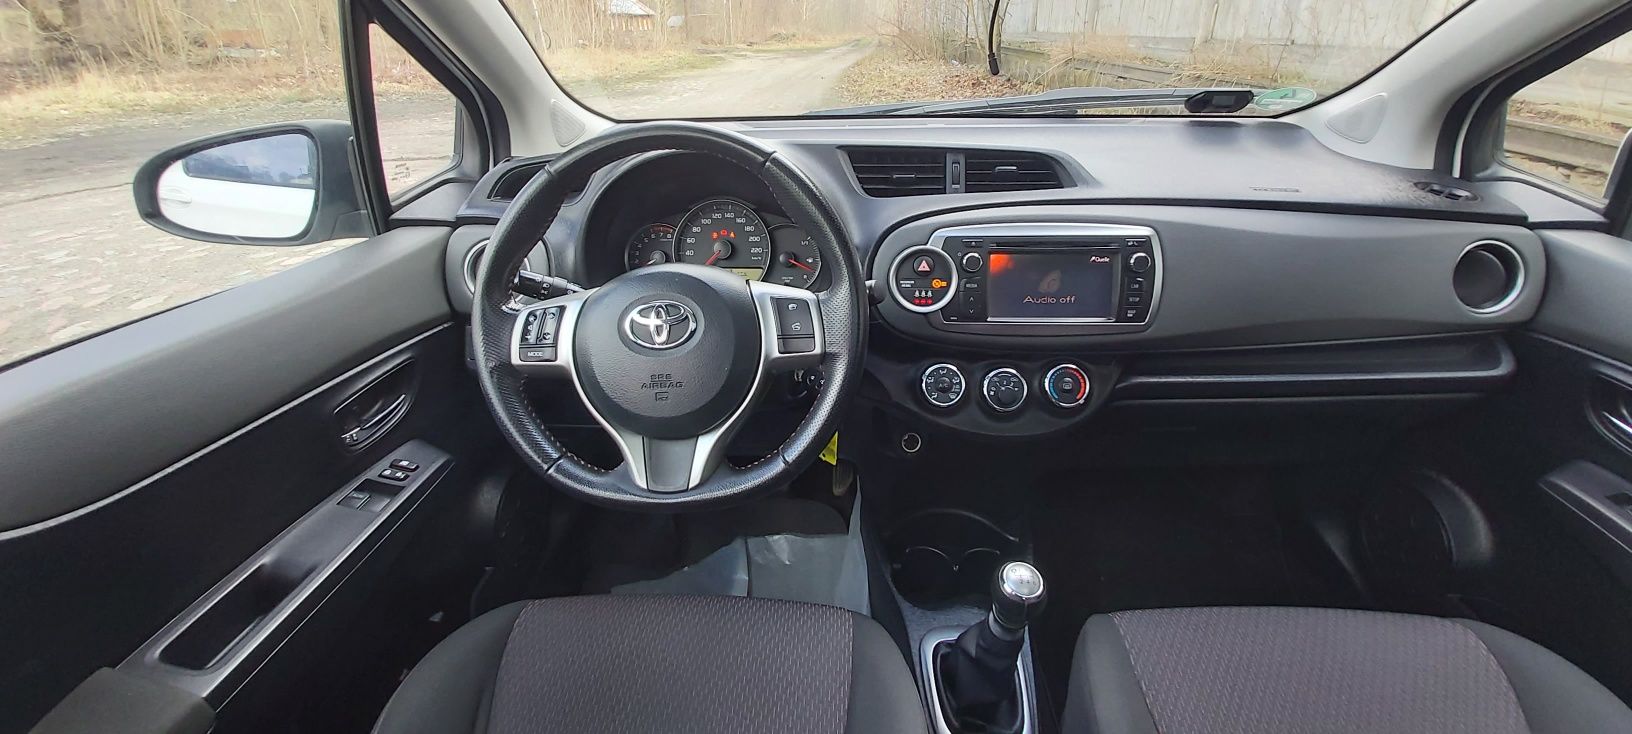 Toyota Yaris 1,3 benzyna 2012r panorama, kamera